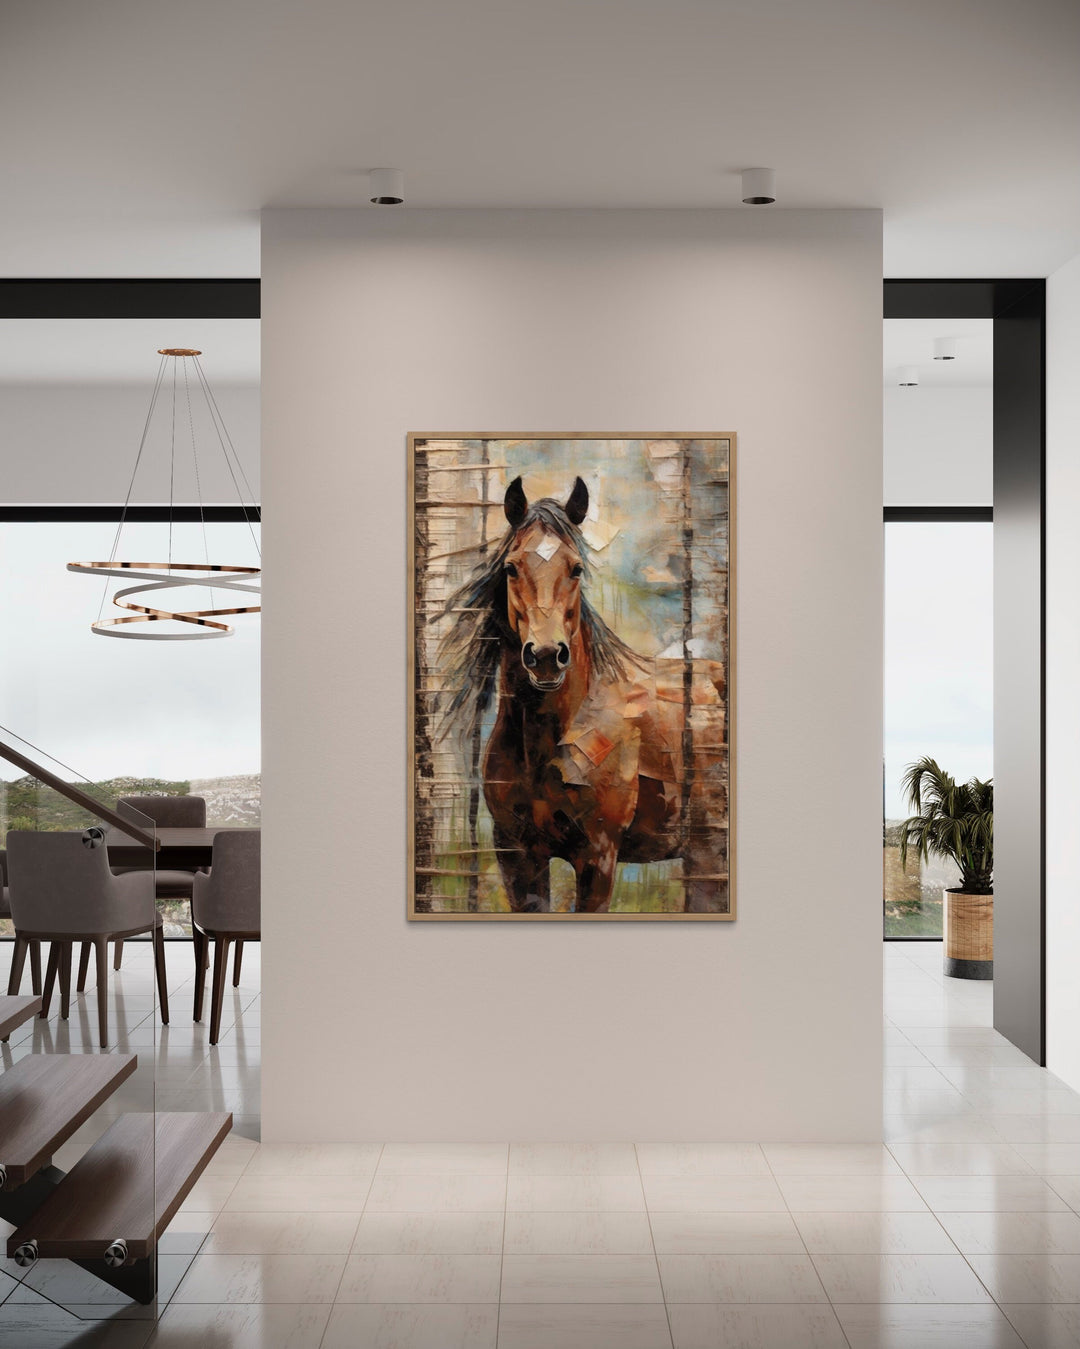 Rustic Farm Horse Wall Art On Canvas in modern home